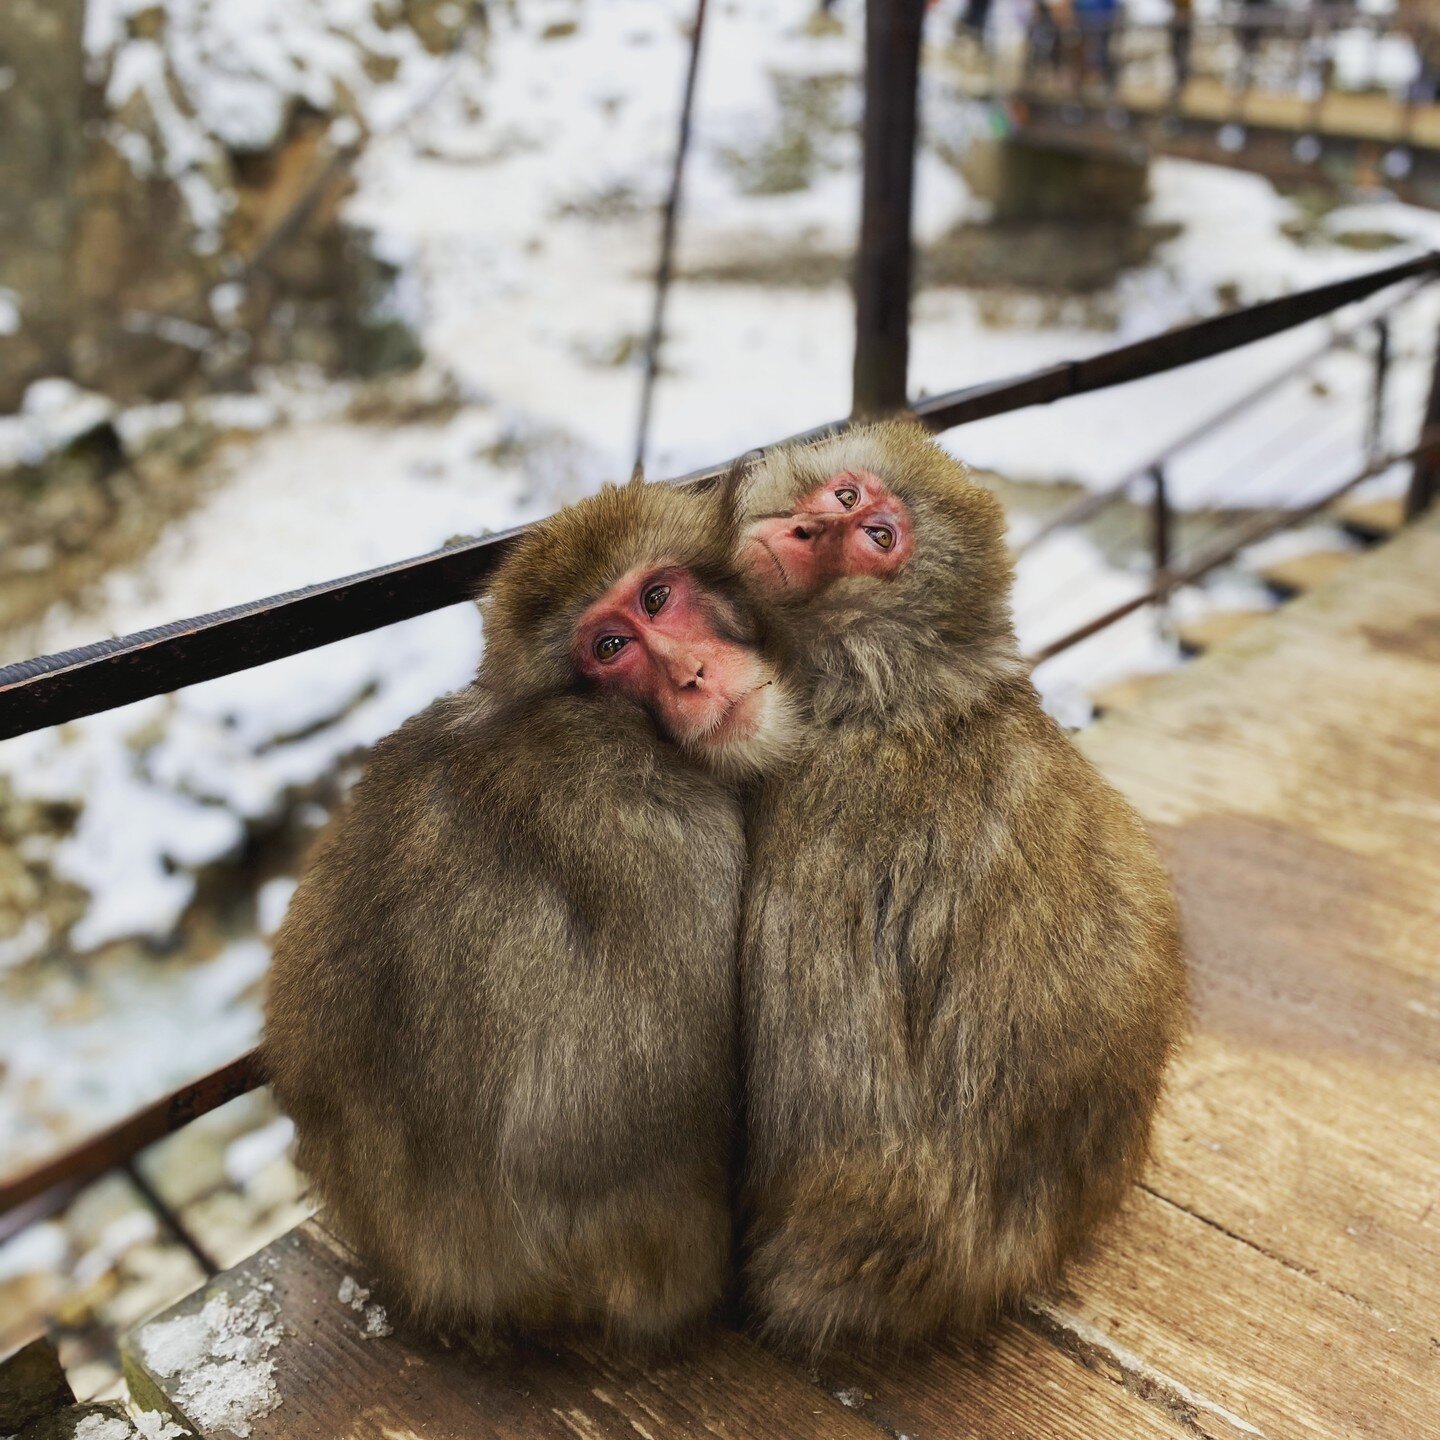 Our Snow Monkey Tour is officially over for this winter!
See you next winter season 🐵♡

#snowmonkey #hakuba #skitrip